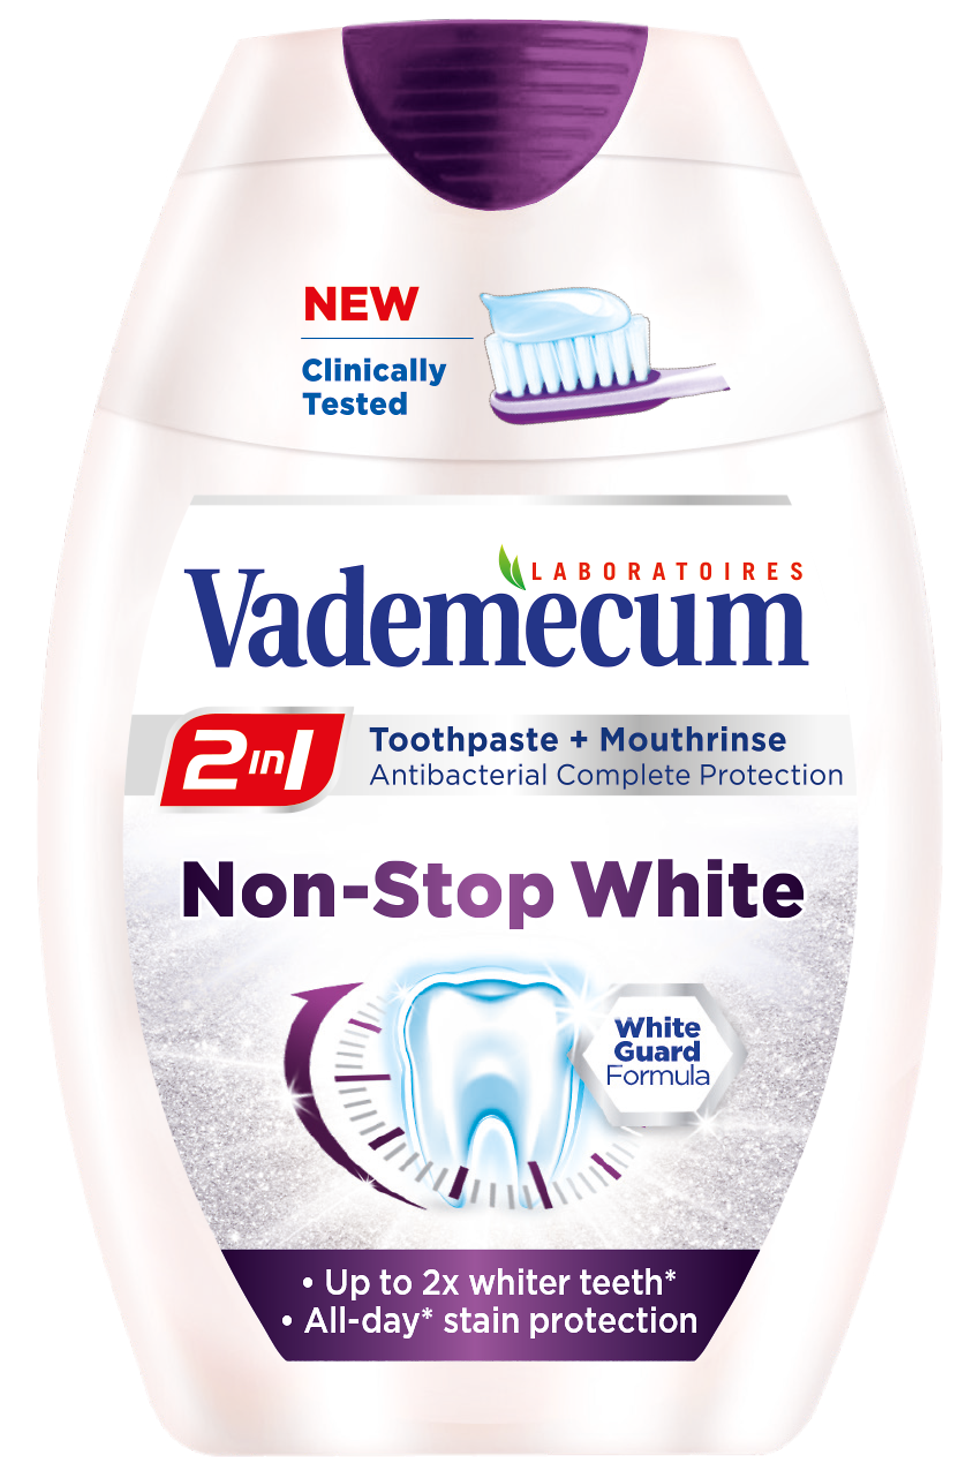 
Vademecum Non-Stop White, zubná pasta 2 v 1